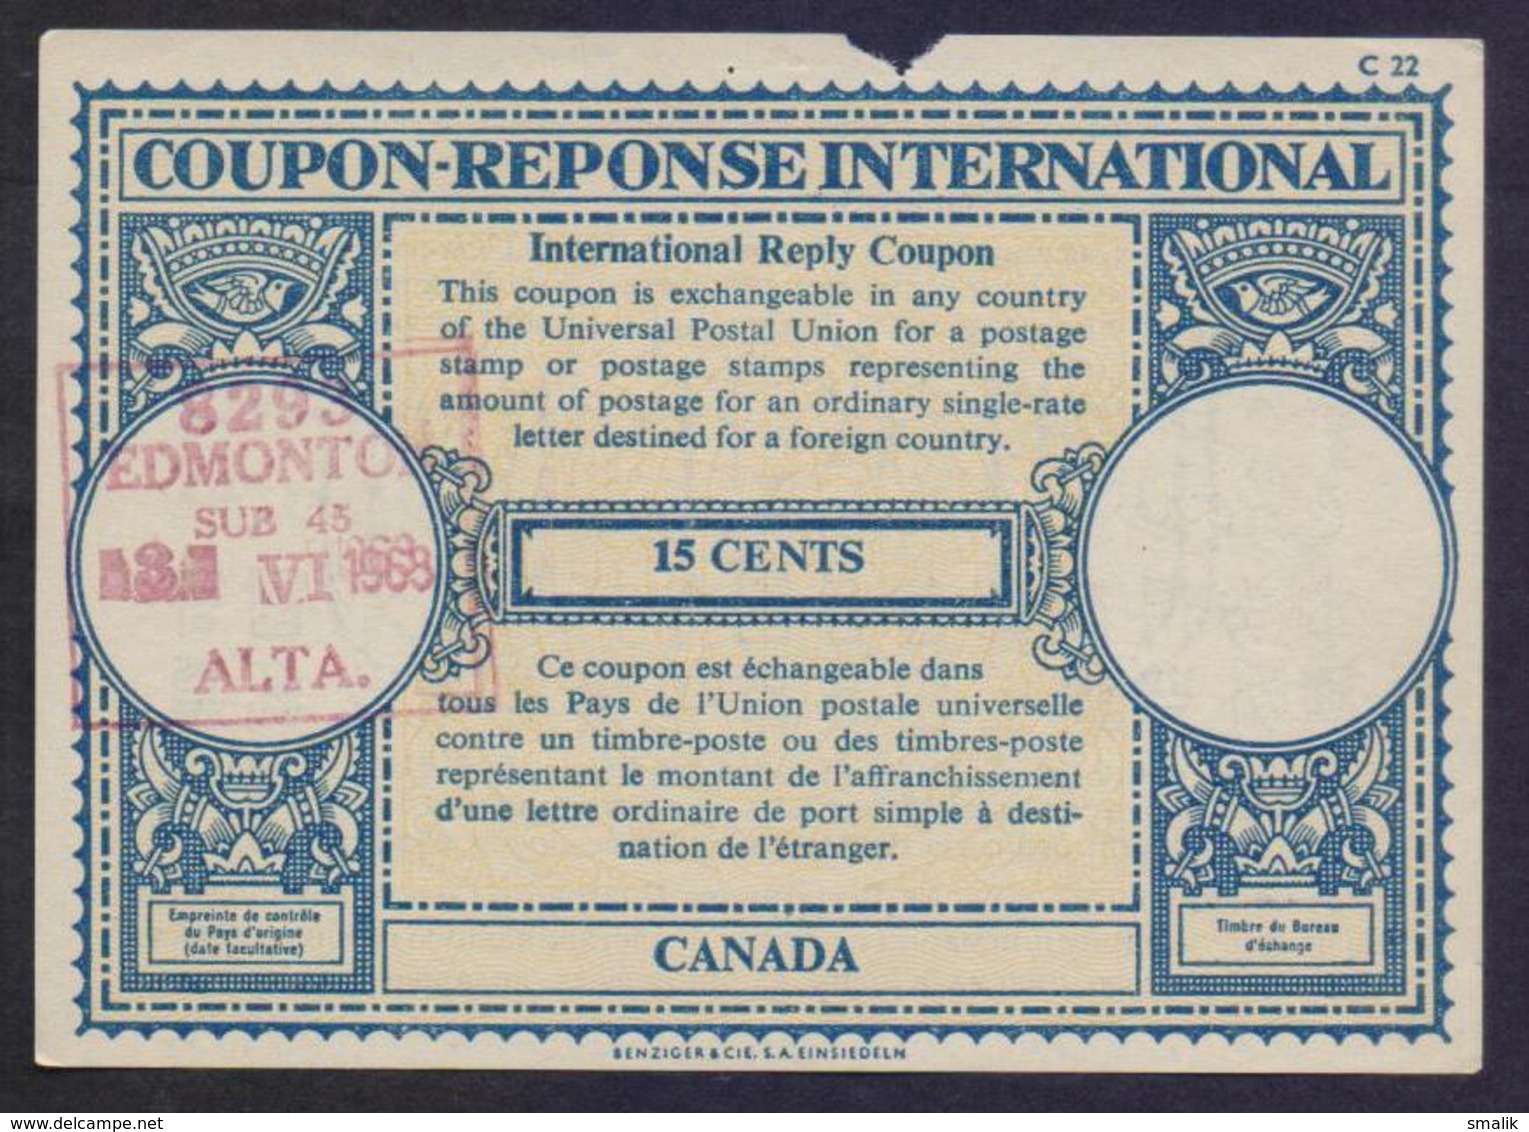 CANADA - 15 Cents London Type IRC COUPON REPONSE INTERNATIONAL REPLY, UPU, Cancelled 3.6.1968, Minor Broken - Buoni Risposta Internazionali (Coupon)